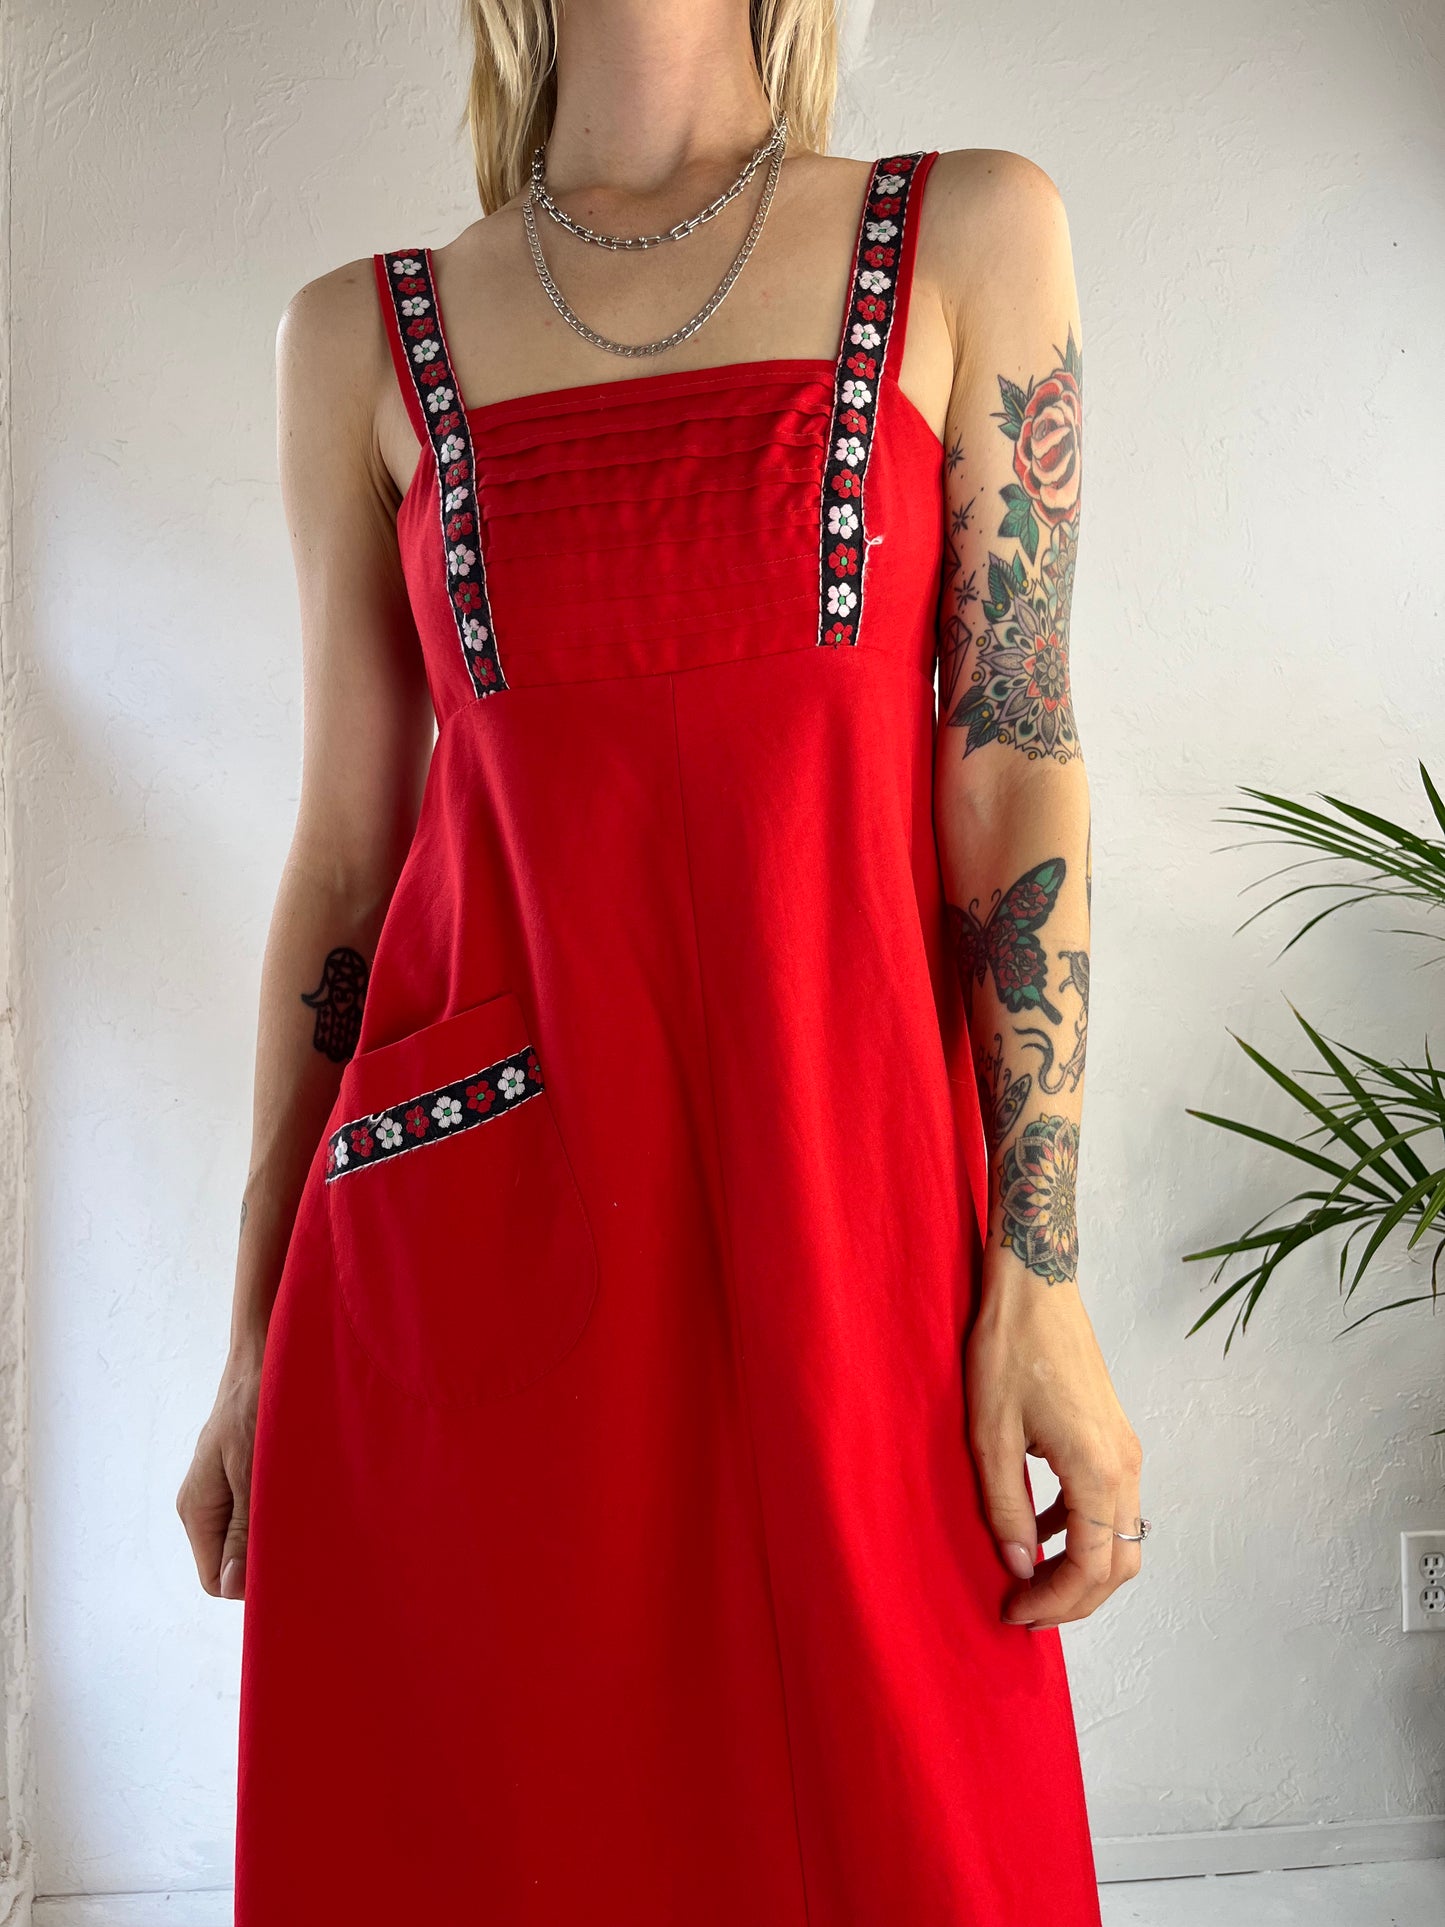 70s Red Sleeveless Mini Shift Dress / Small